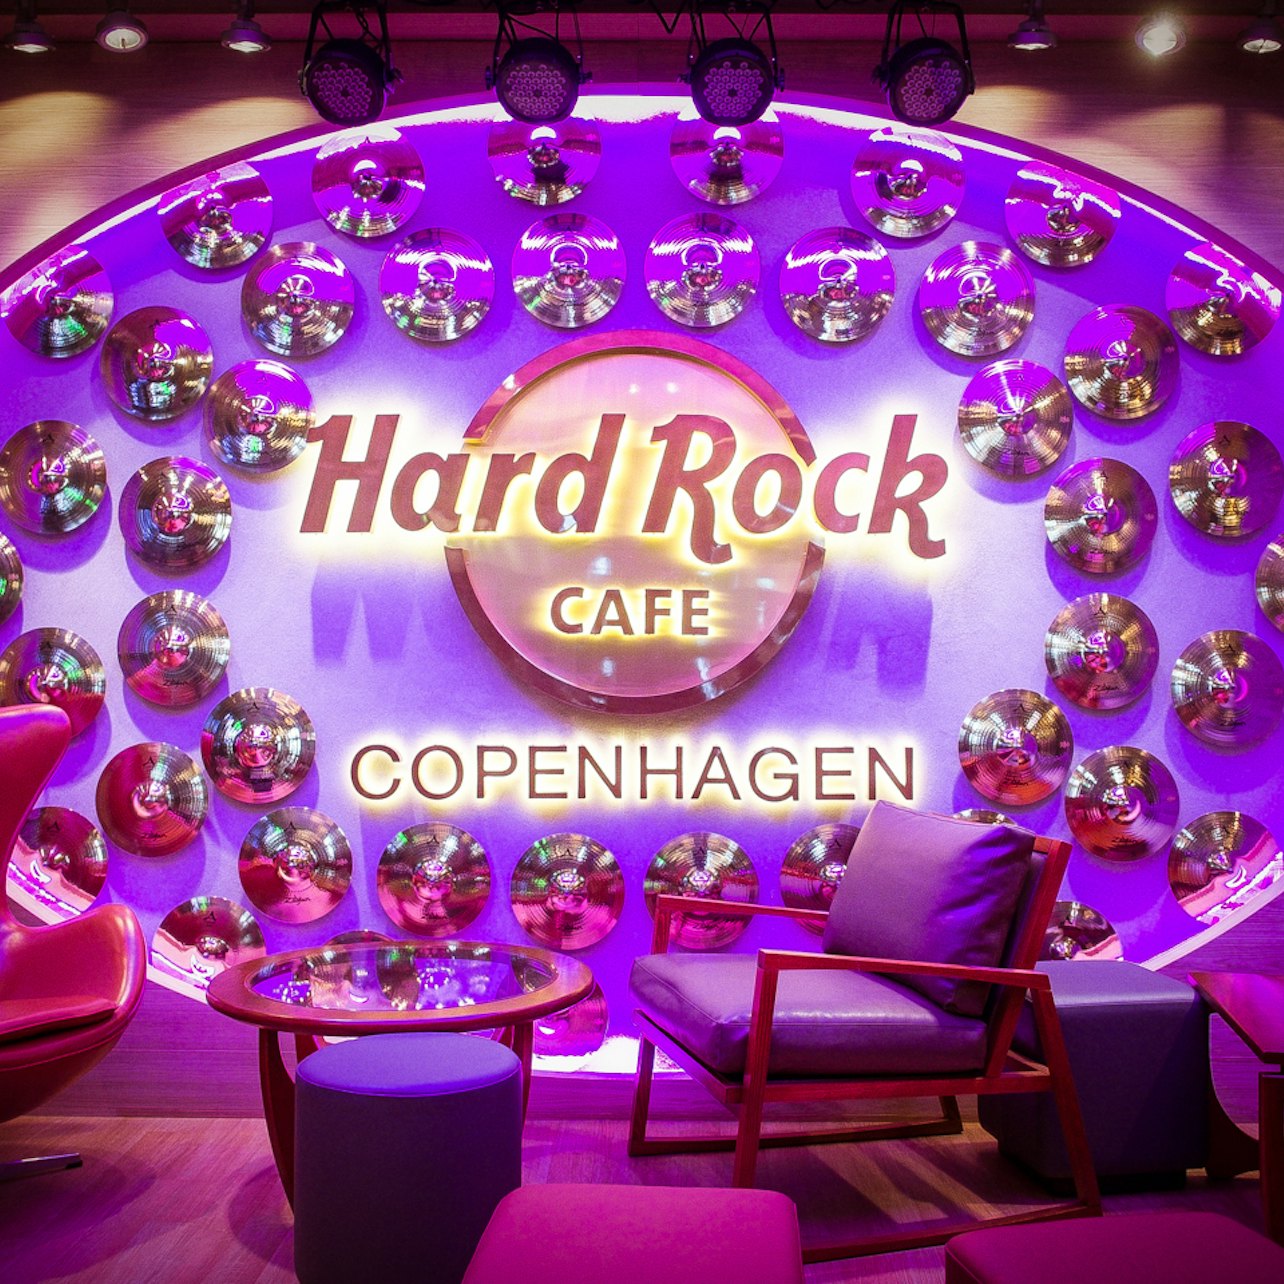 Hard Rock Cafe Copenhagen - Accommodations in Copenhagen